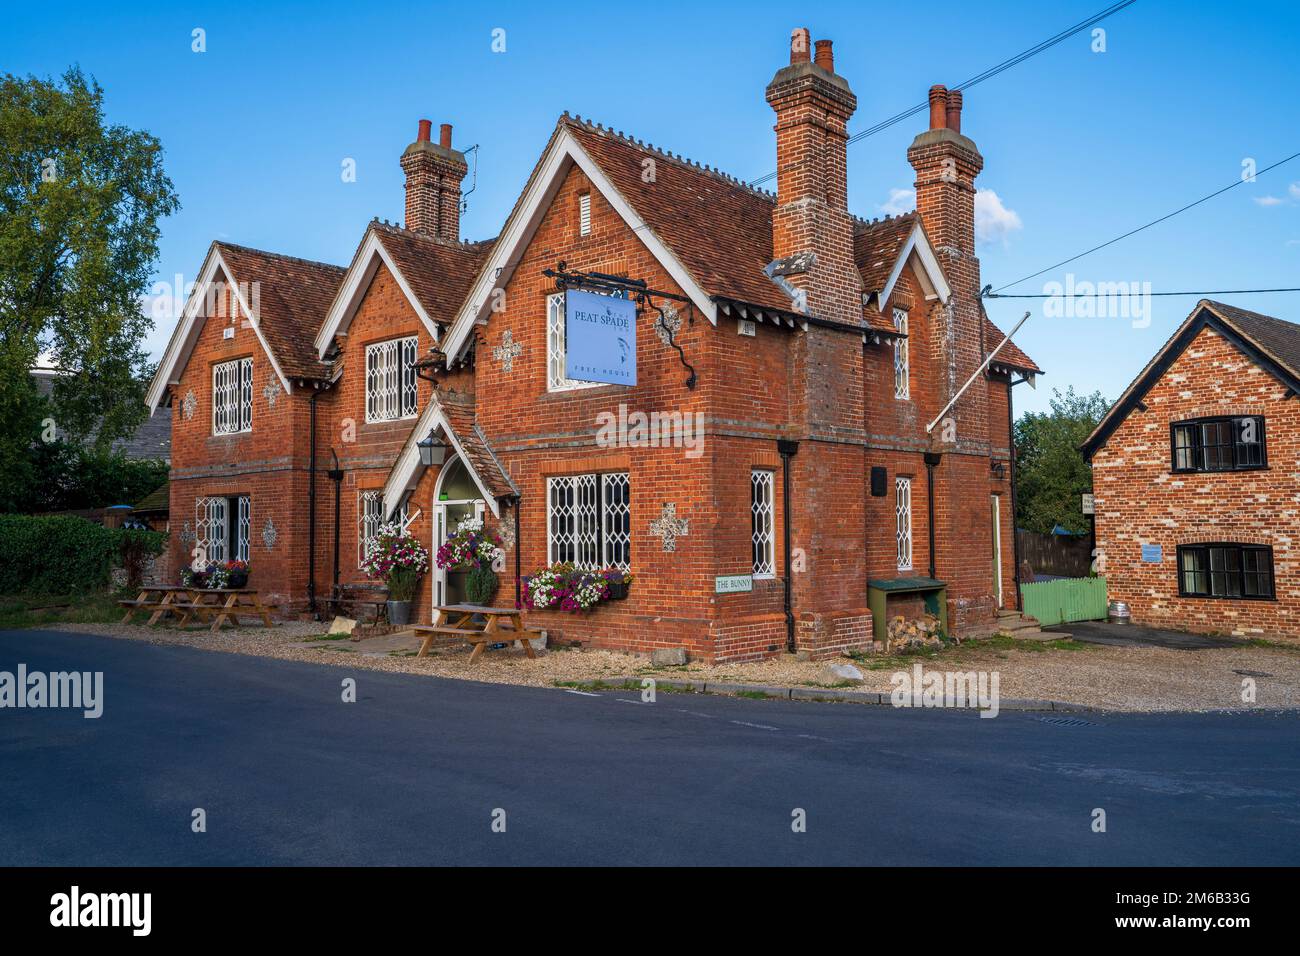 The Peat Spade Inn in the village of Longstock, Hampshire, England, Uk Stock Photo